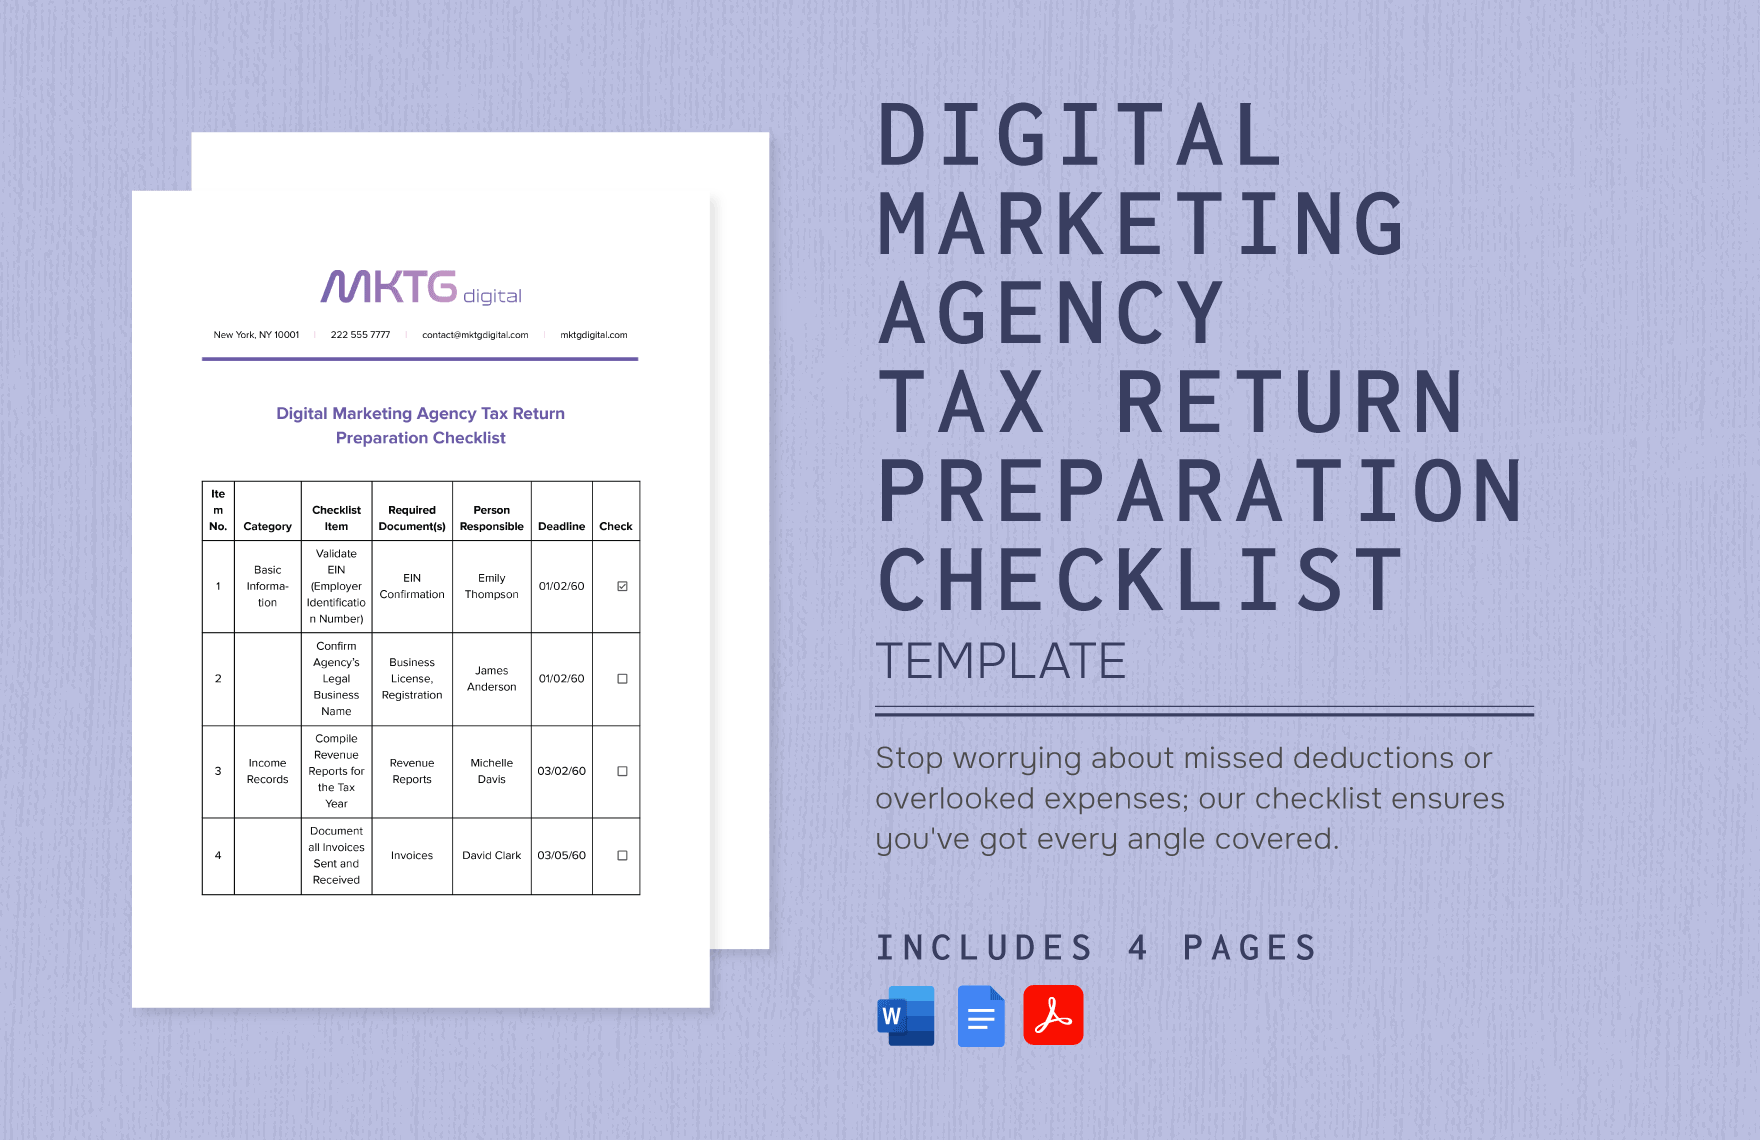 Digital Marketing Agency Tax Return Preparation Checklist Template